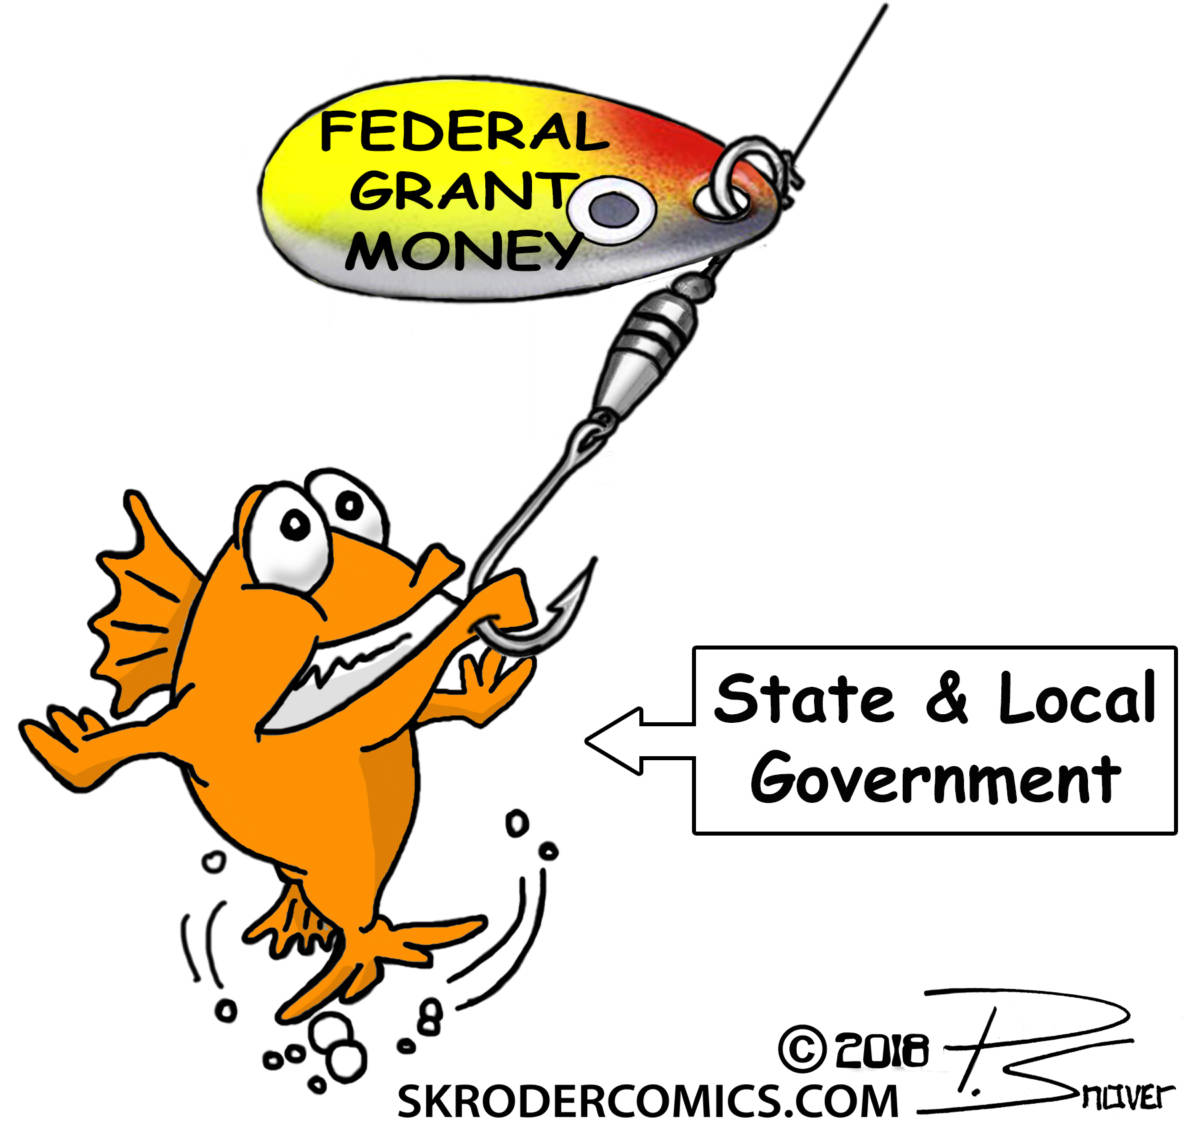 Cartoon: Federal grant money By Paul Snover, Skroder Comics